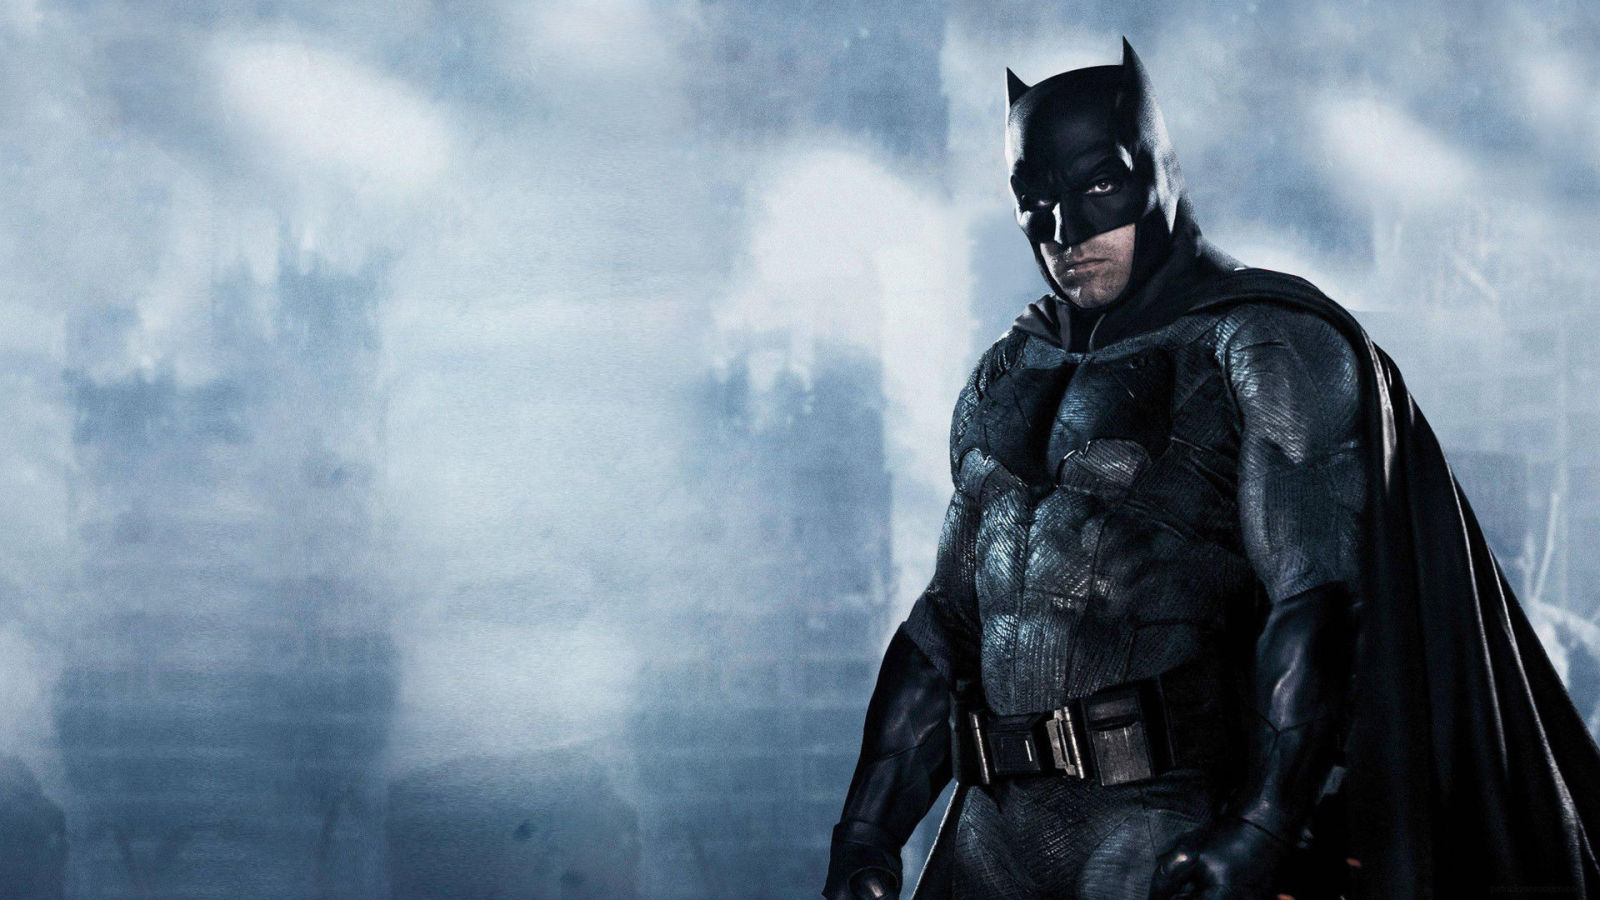 Teem Urban Blog: Batman star Ben Affleck says he's completed treatment ...